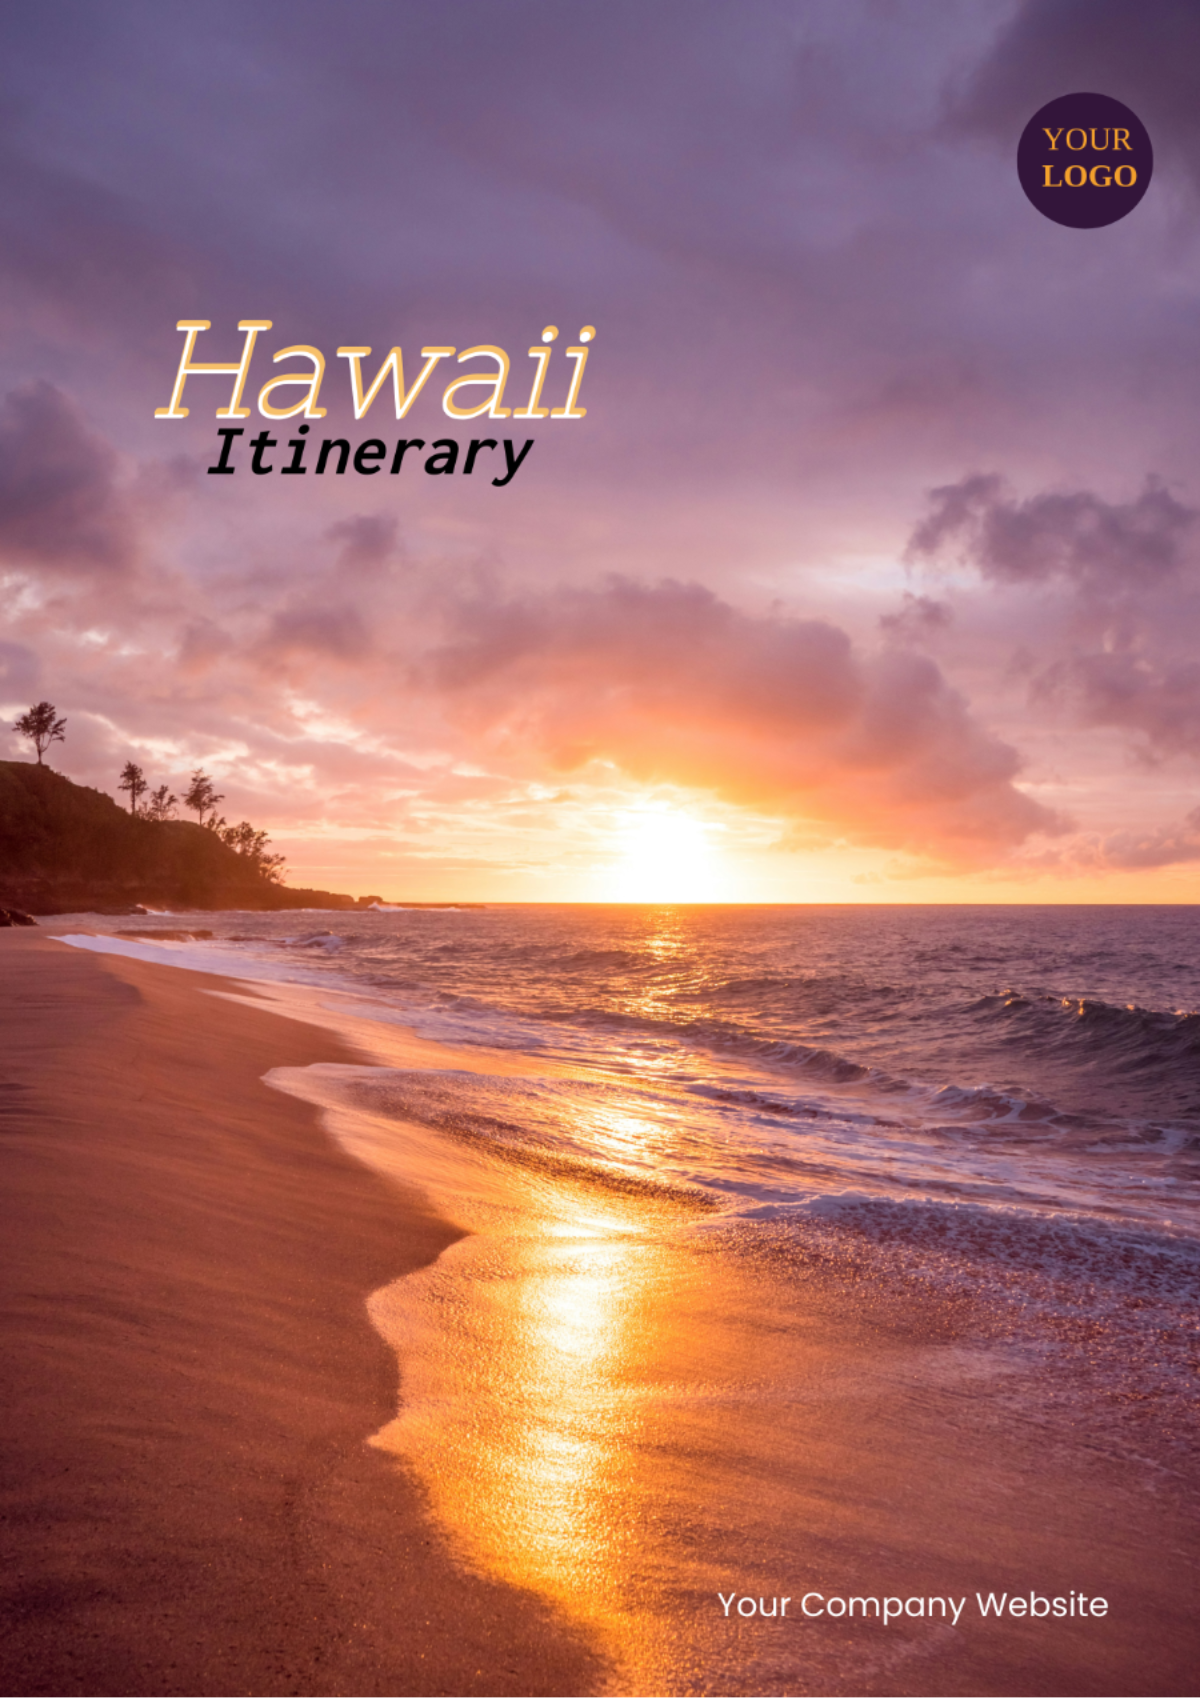 12 Day Hawaii Itinerary Template